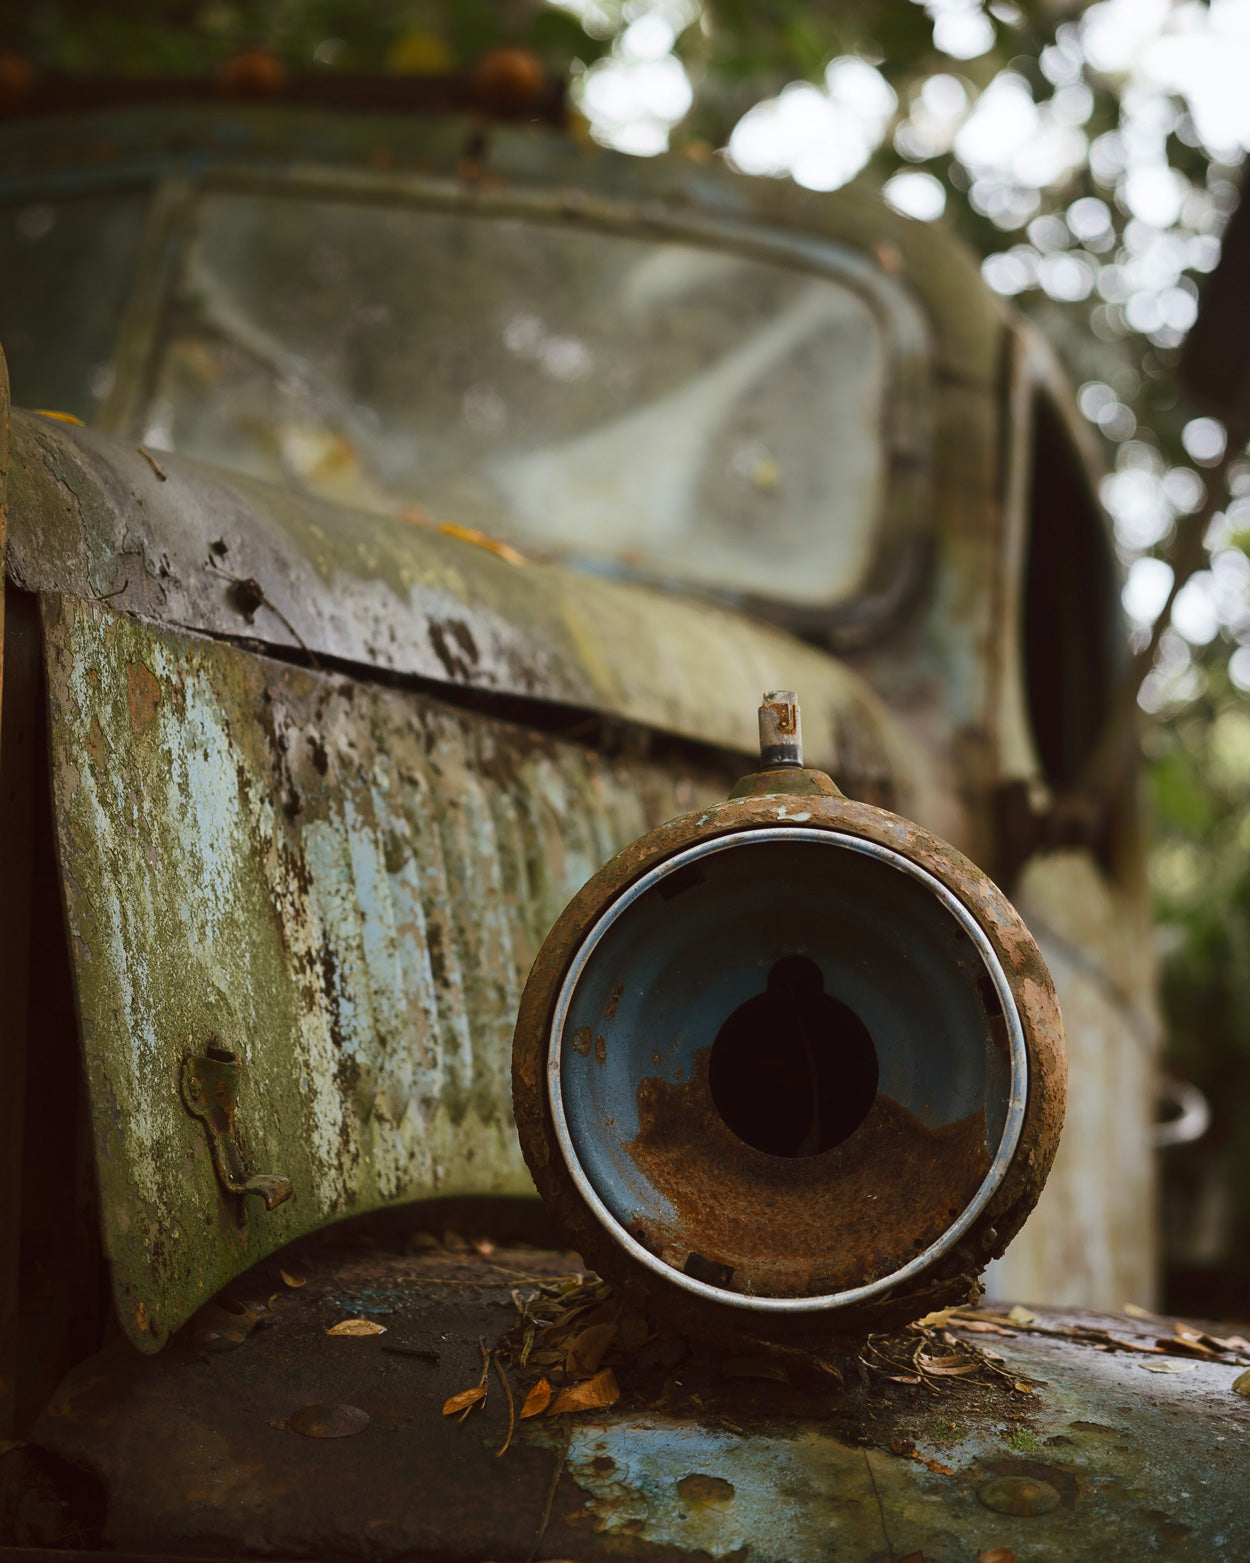 Front light detail on vintage rundown rusty car